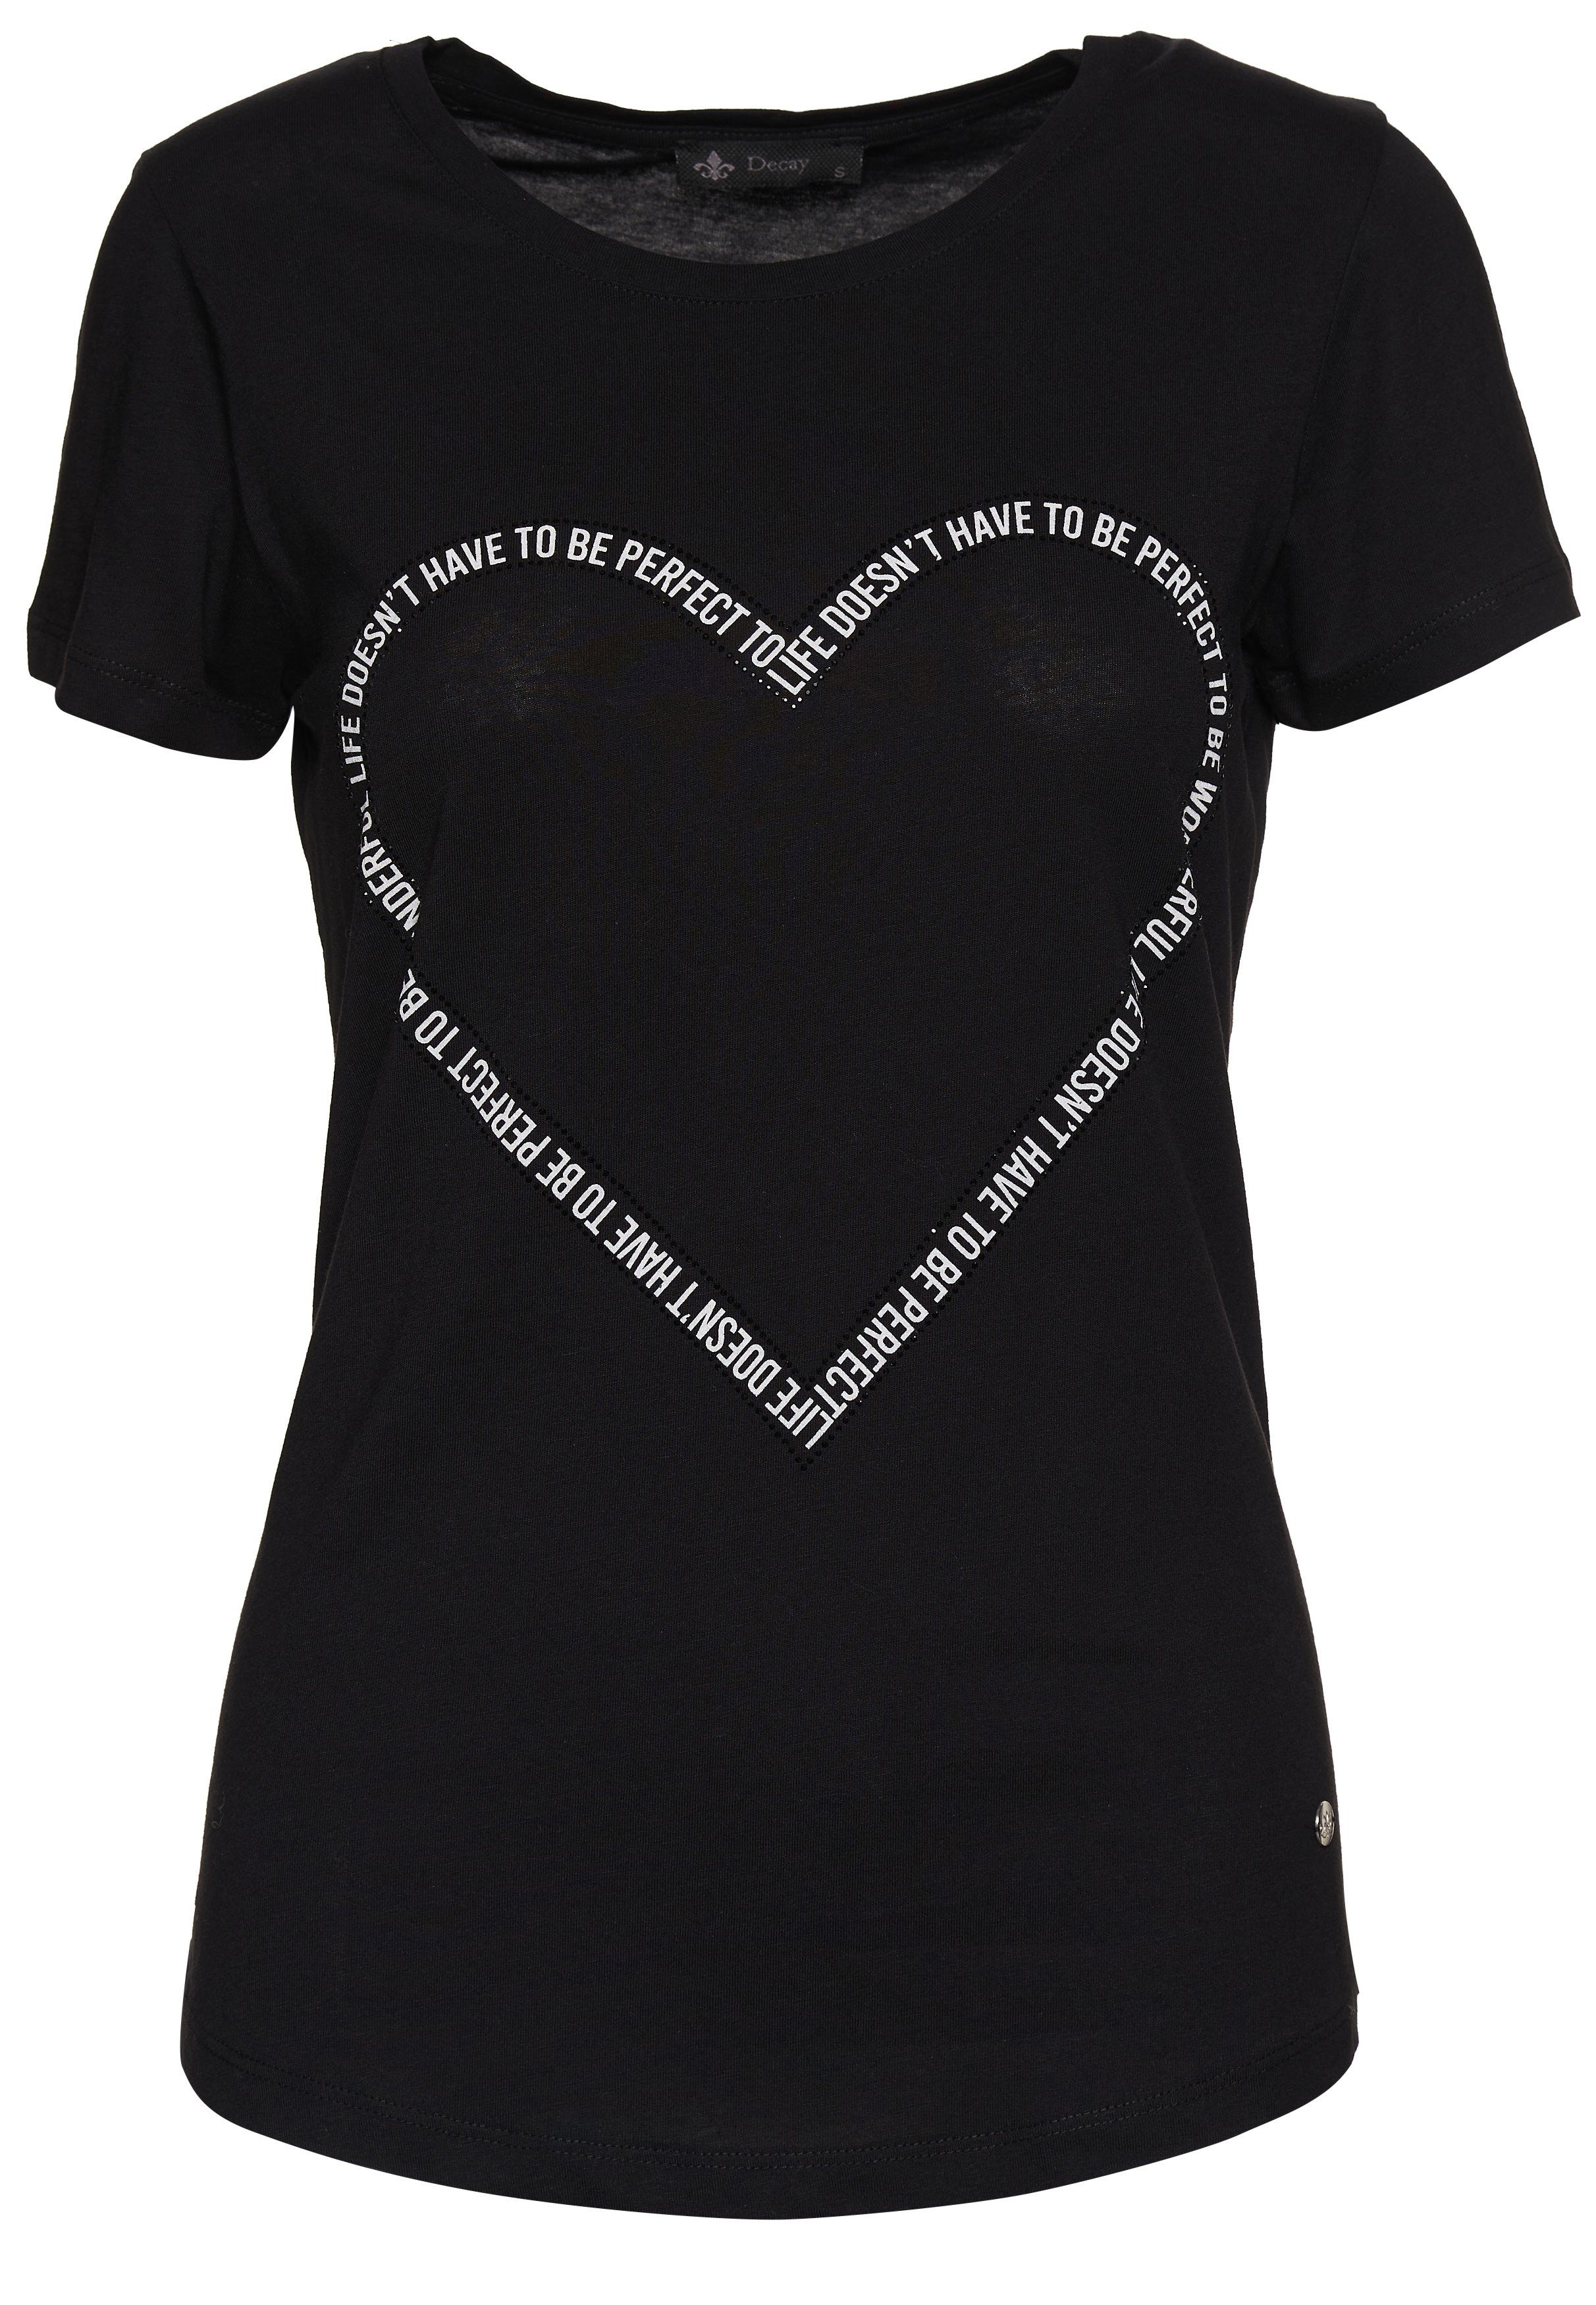 Decay T-Shirt mit Herz-Print